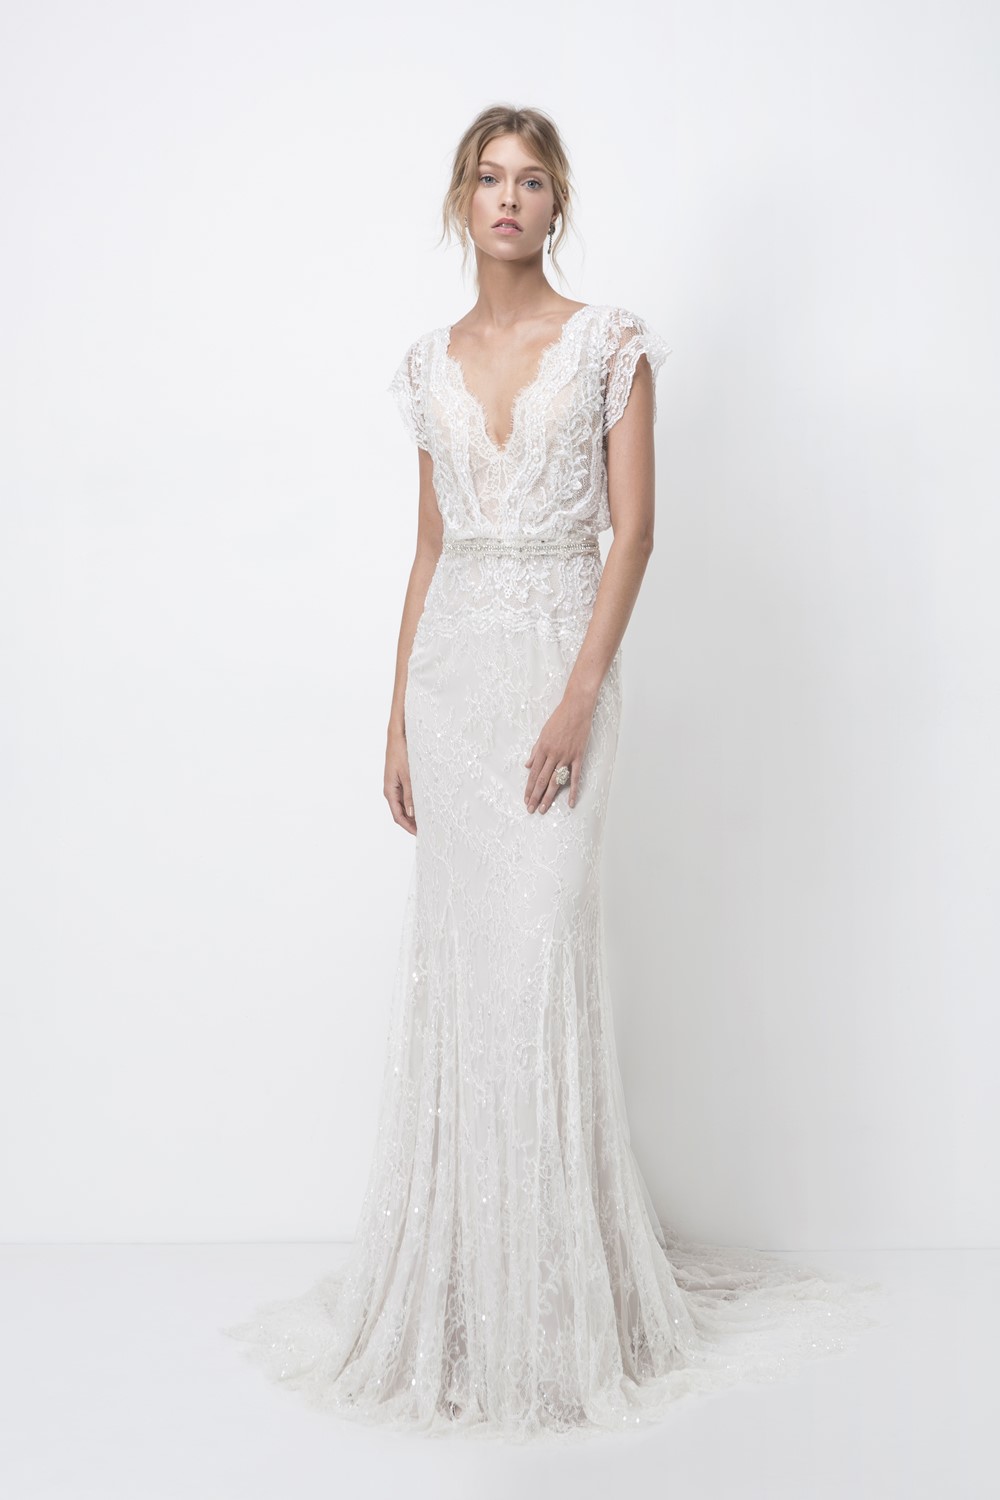 Alexandra Wedding Dress from Lihi Hod's 2018 Bridal Collection